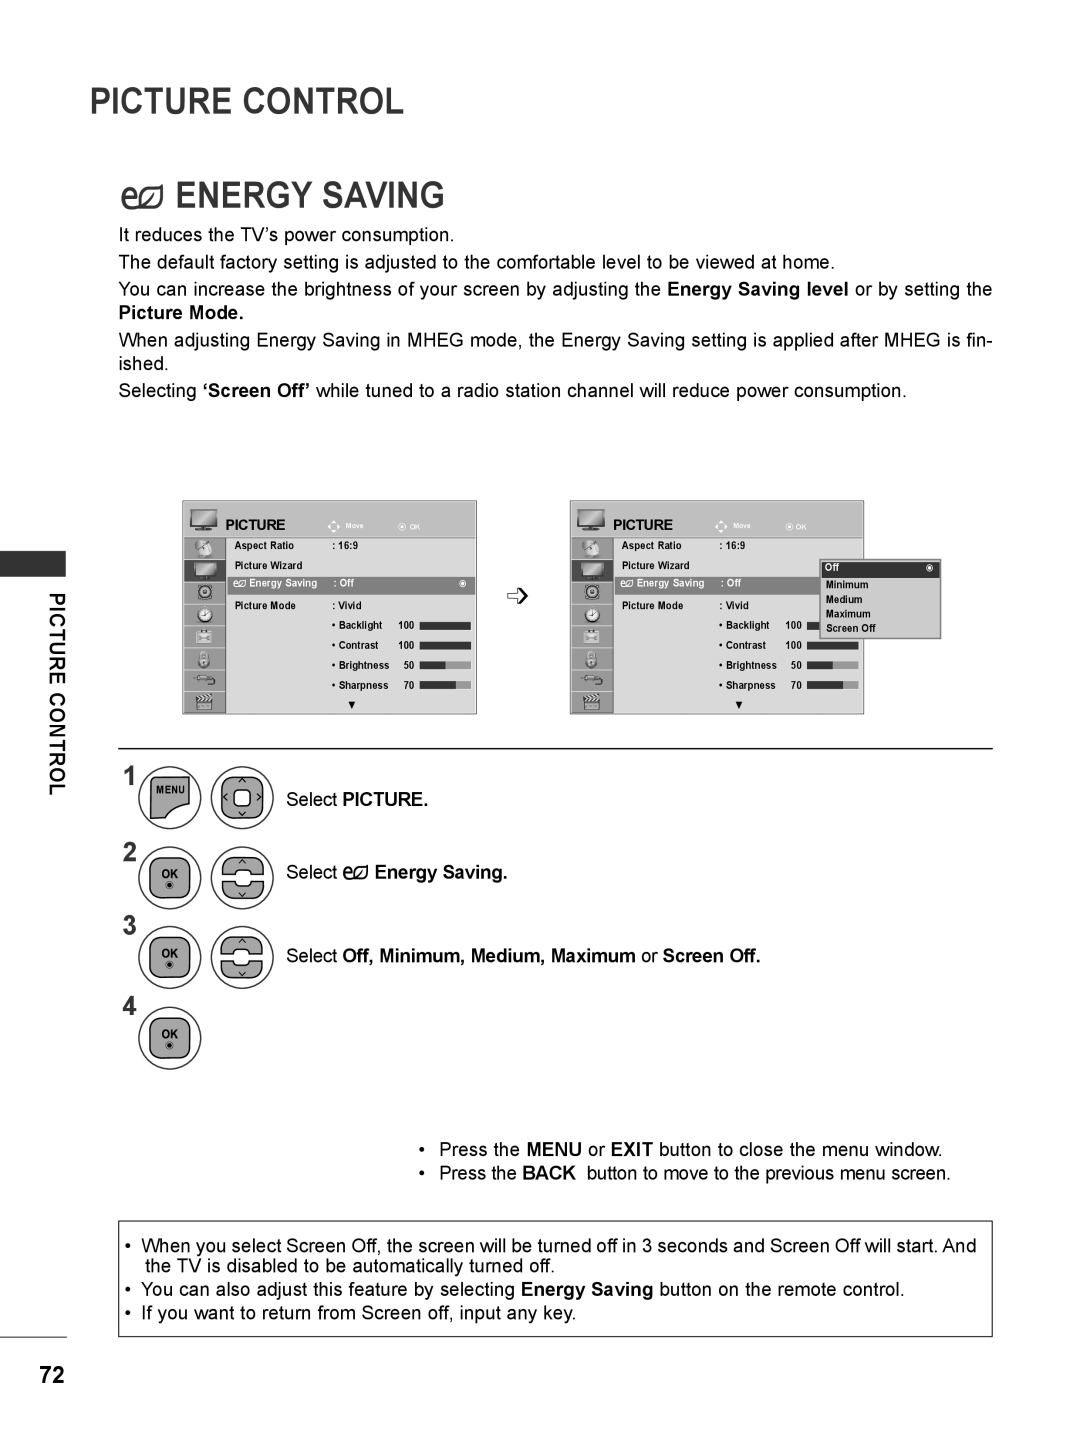 LG Electronics M2780DF, M2780DN Picture Control ꕊ Energy Saving, Picture Mode, Select PICTURE, Select ꕊ Energy Saving 